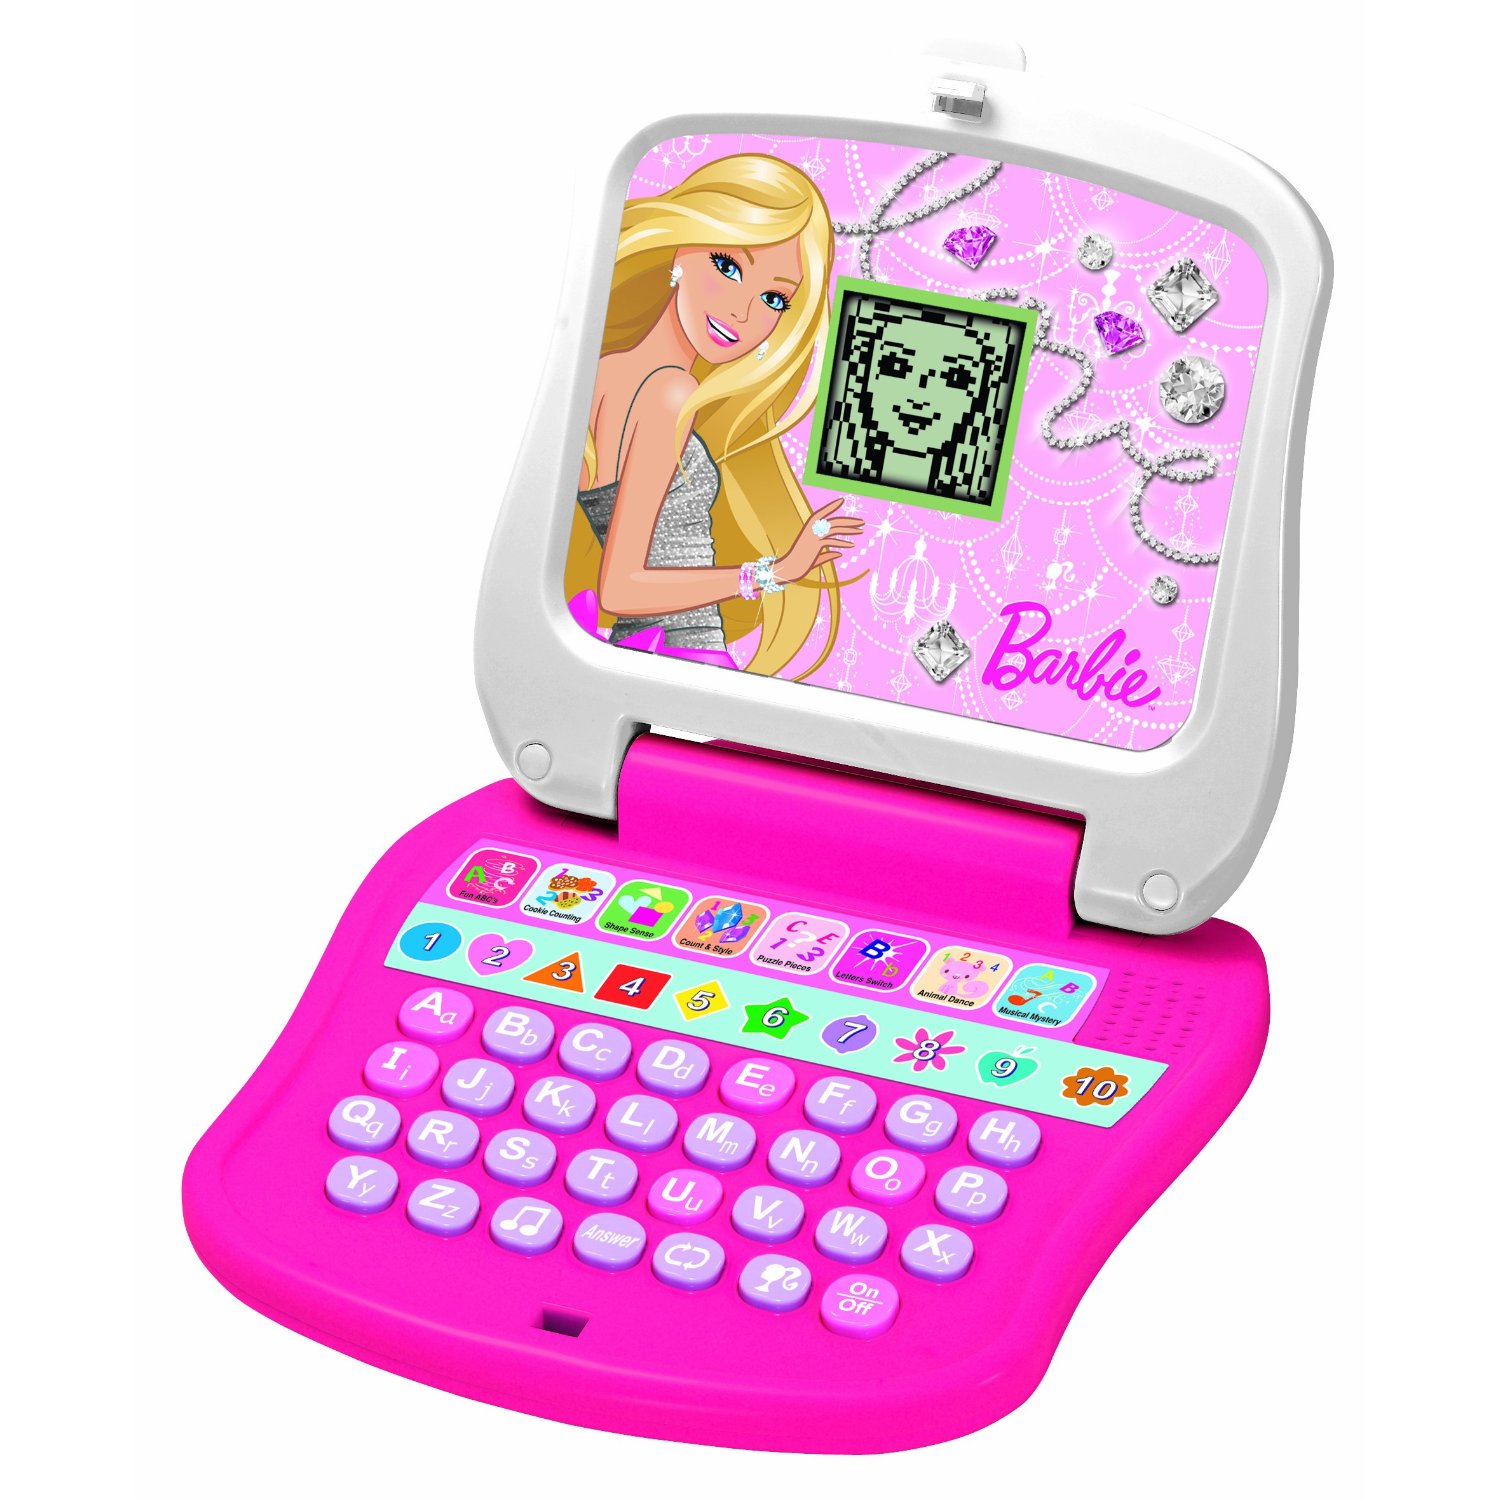 Barbie-laptop-BJ68-09